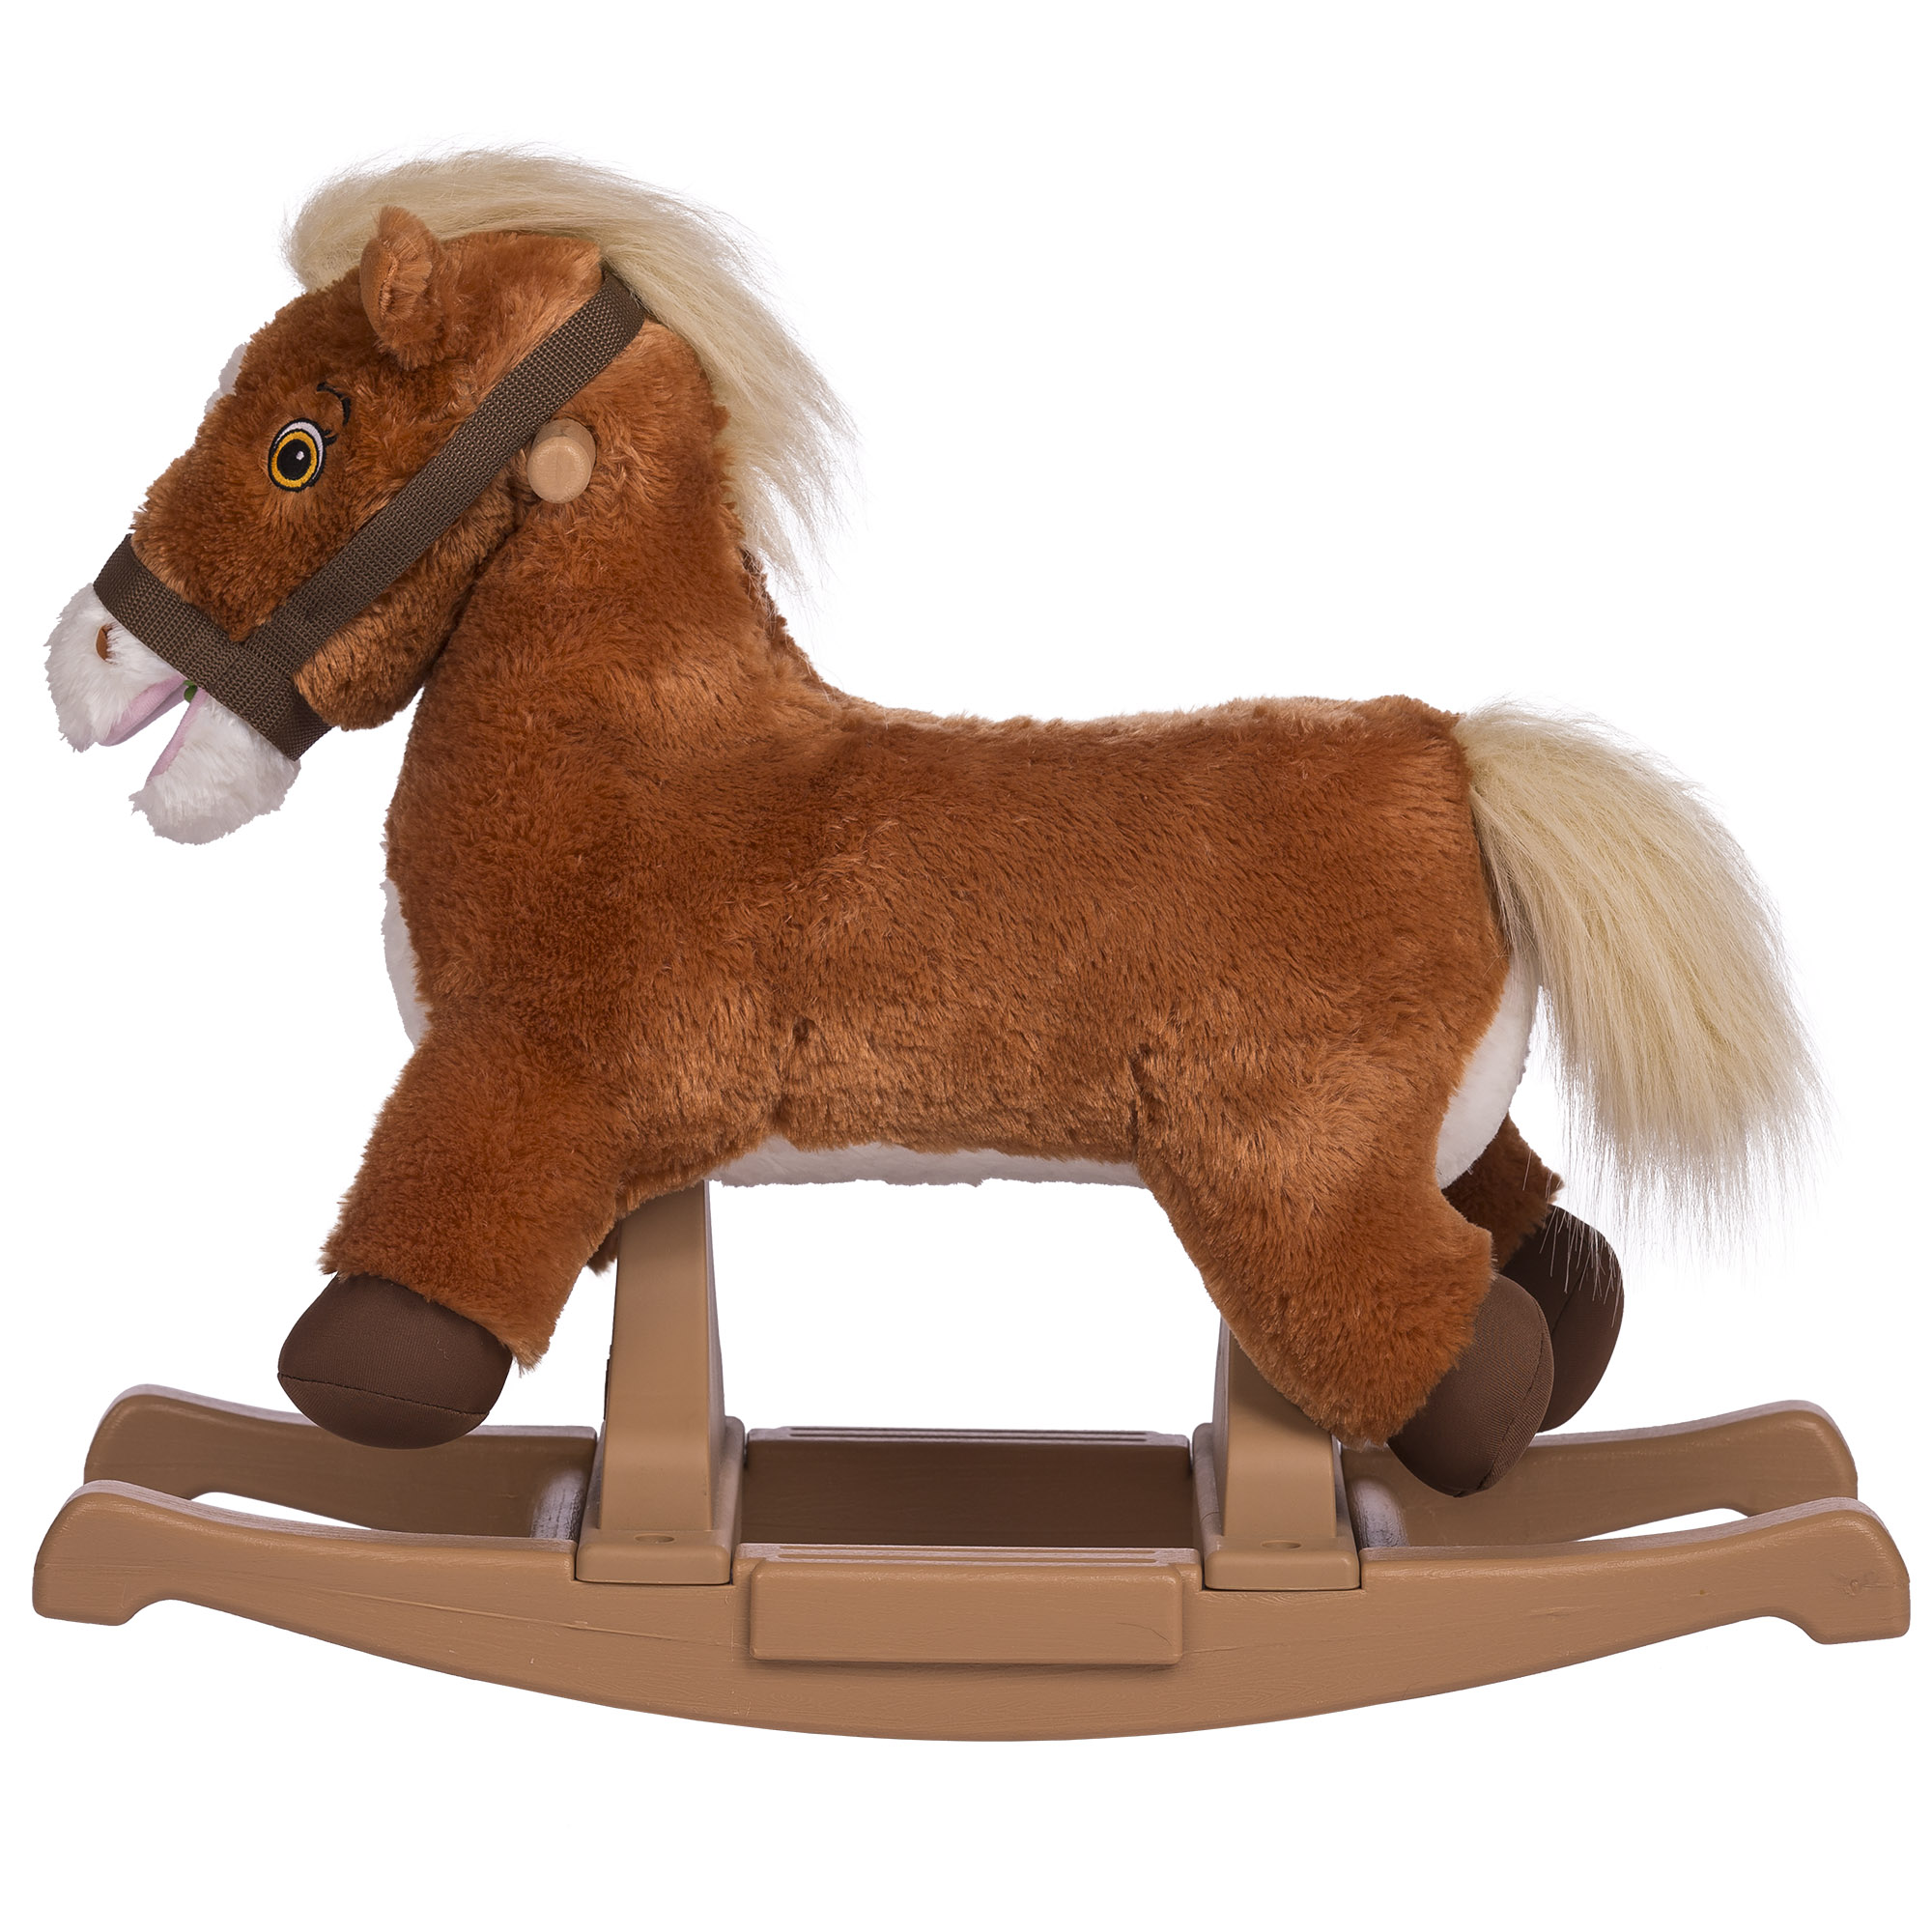 Rockin' Rider Pony Rocker Animated Plush Rocking Horse, Brown - image 3 of 6